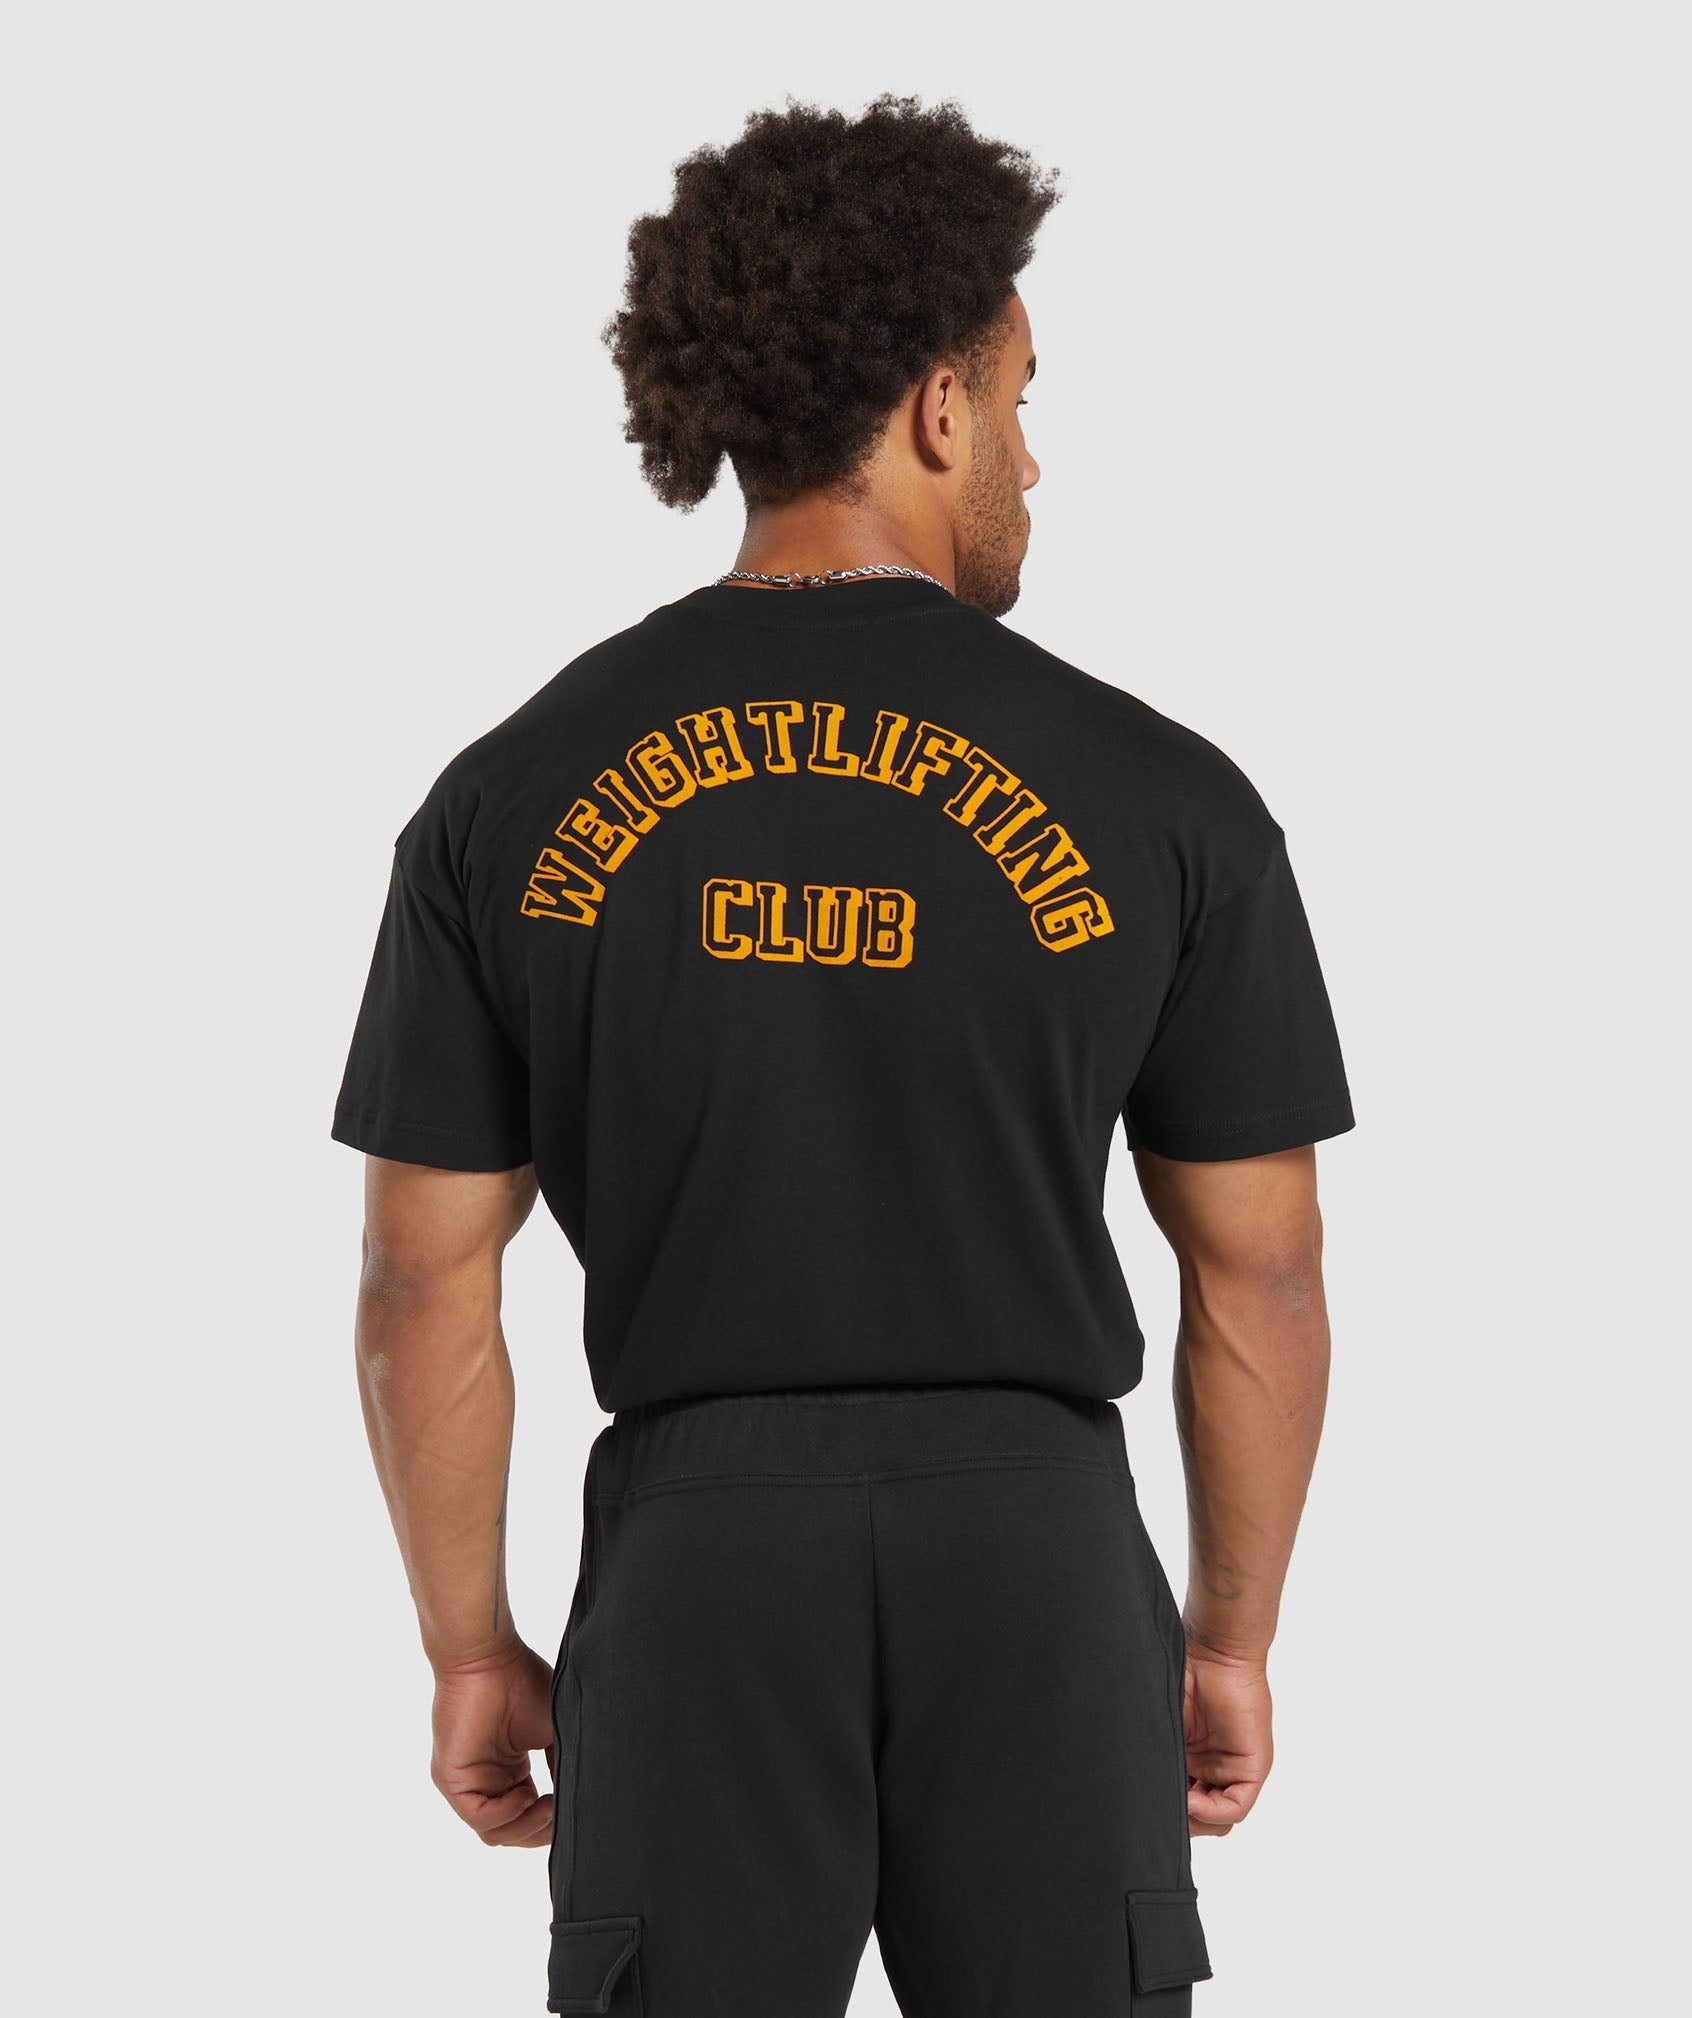 Weightlifting Club T-Shirt in Black